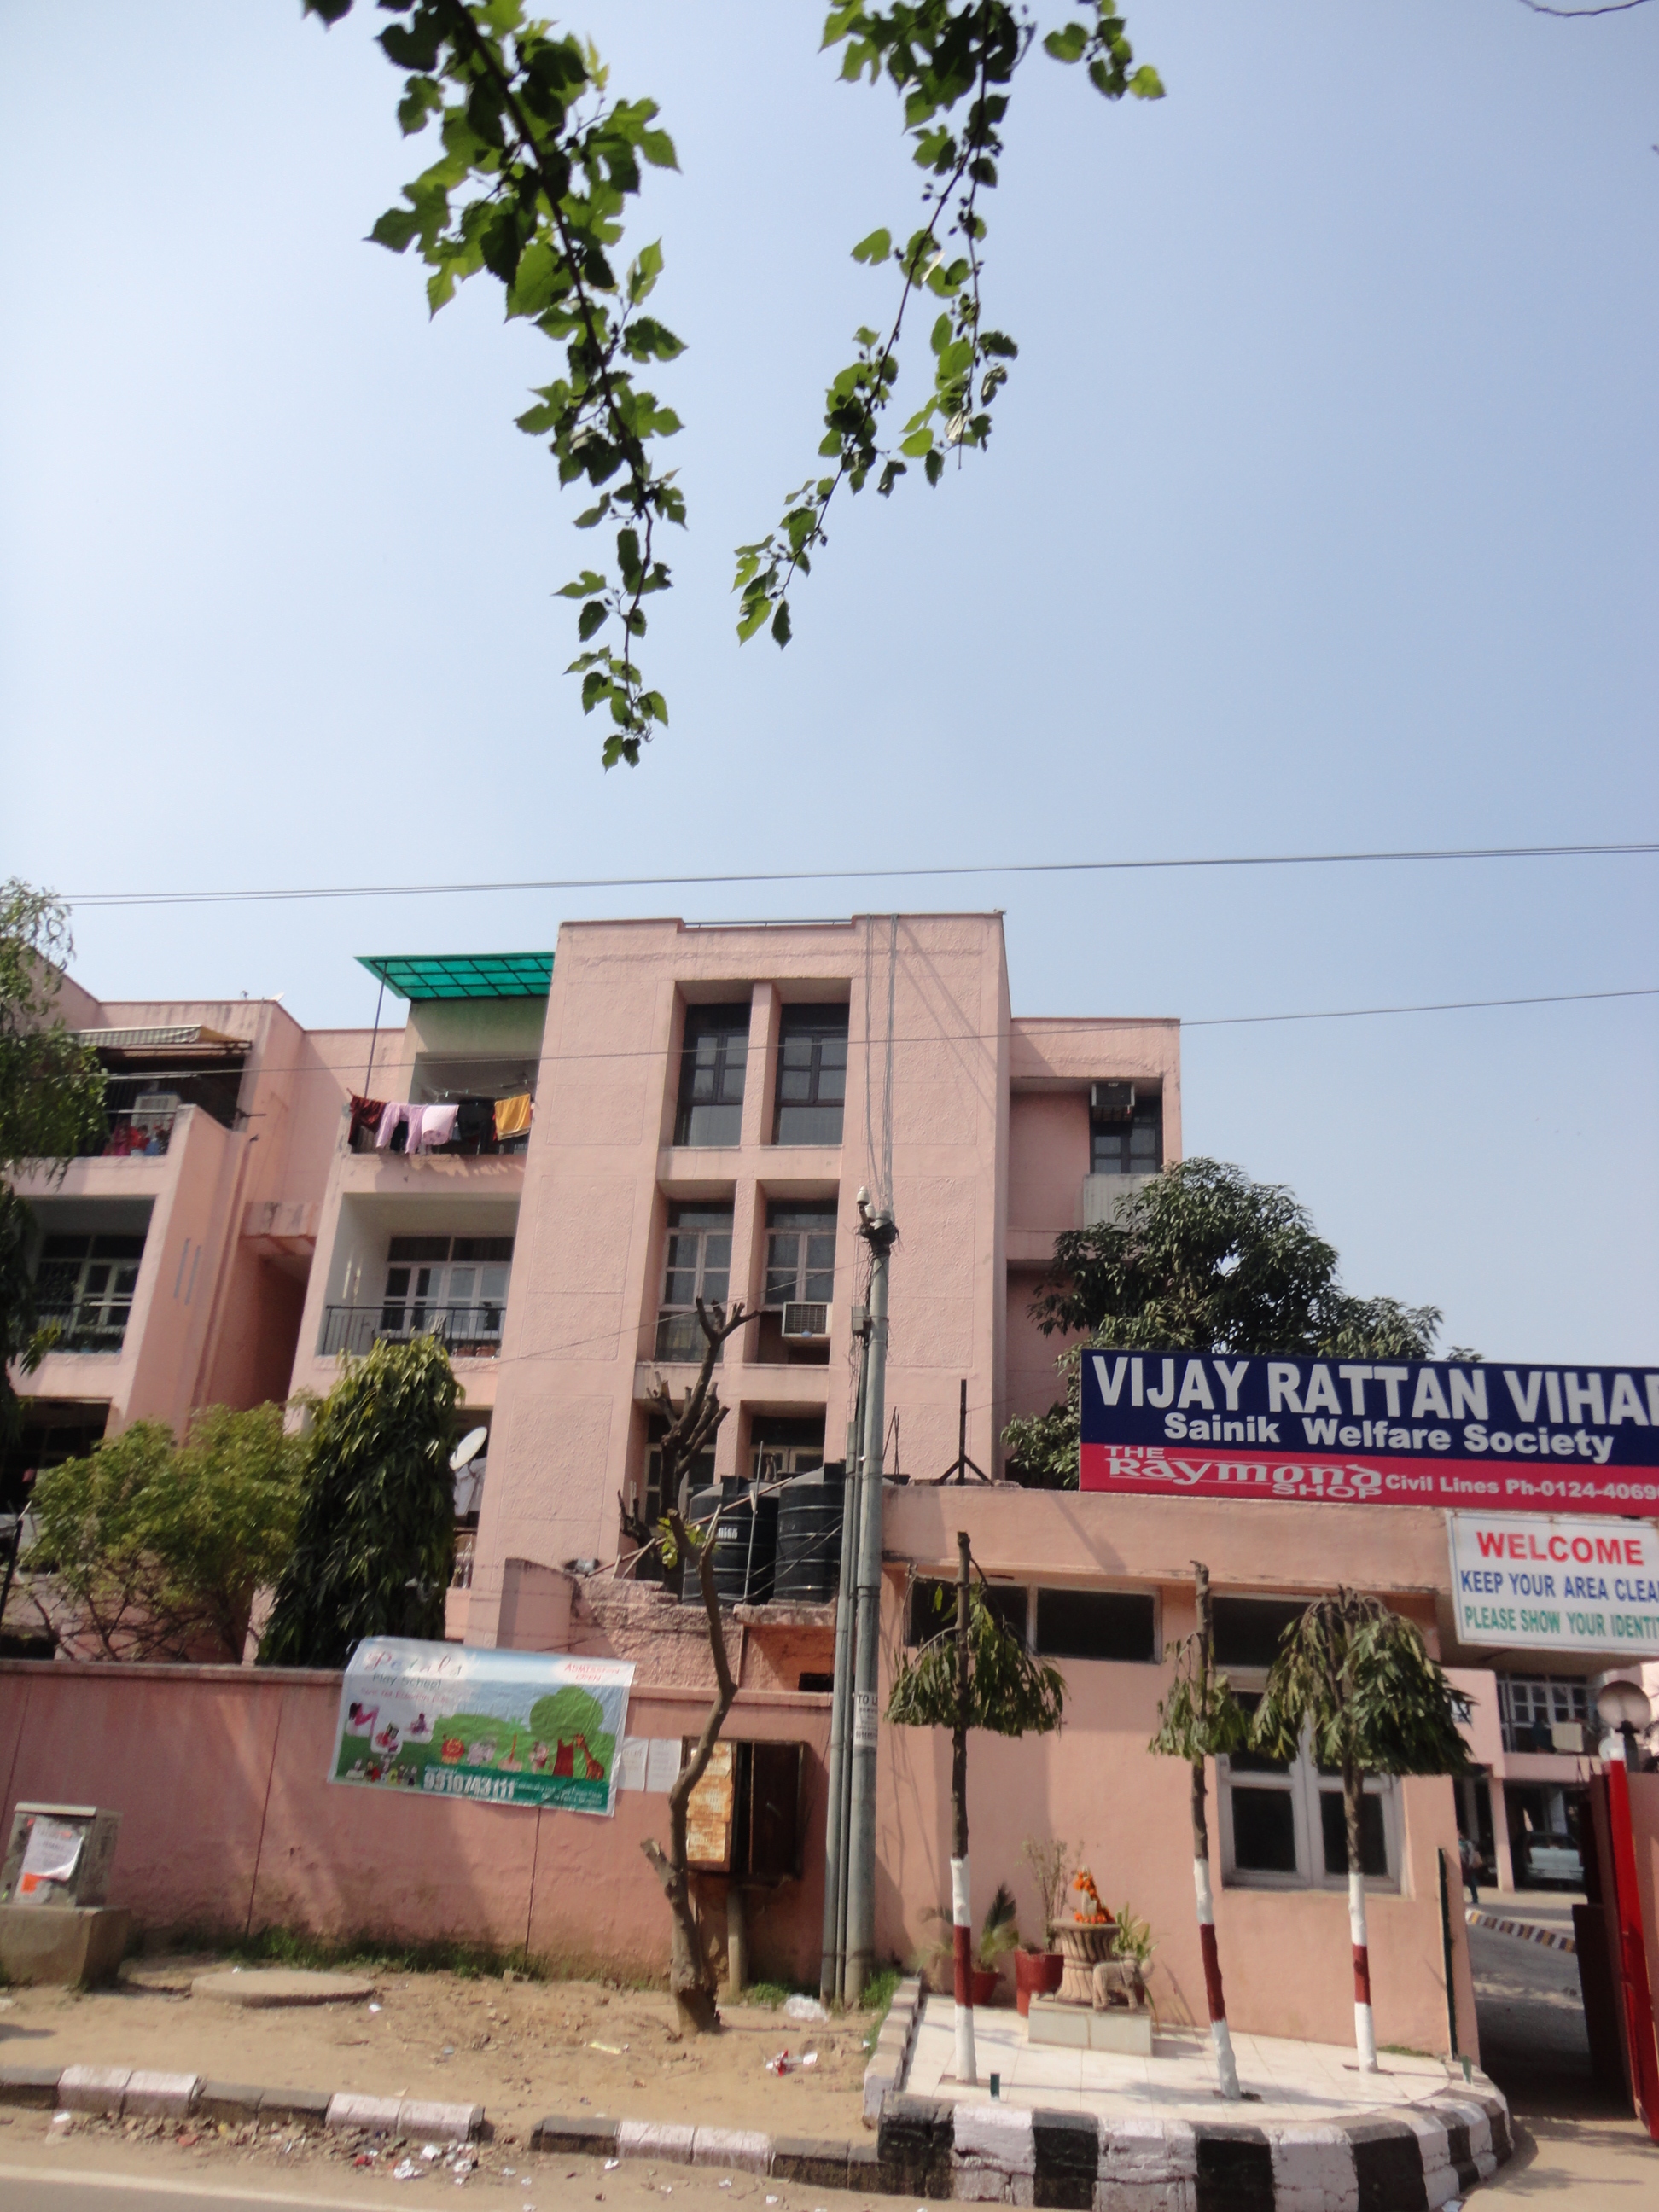 Vijay Rattan Vihar (Sainik Welfare Society) Project Deails